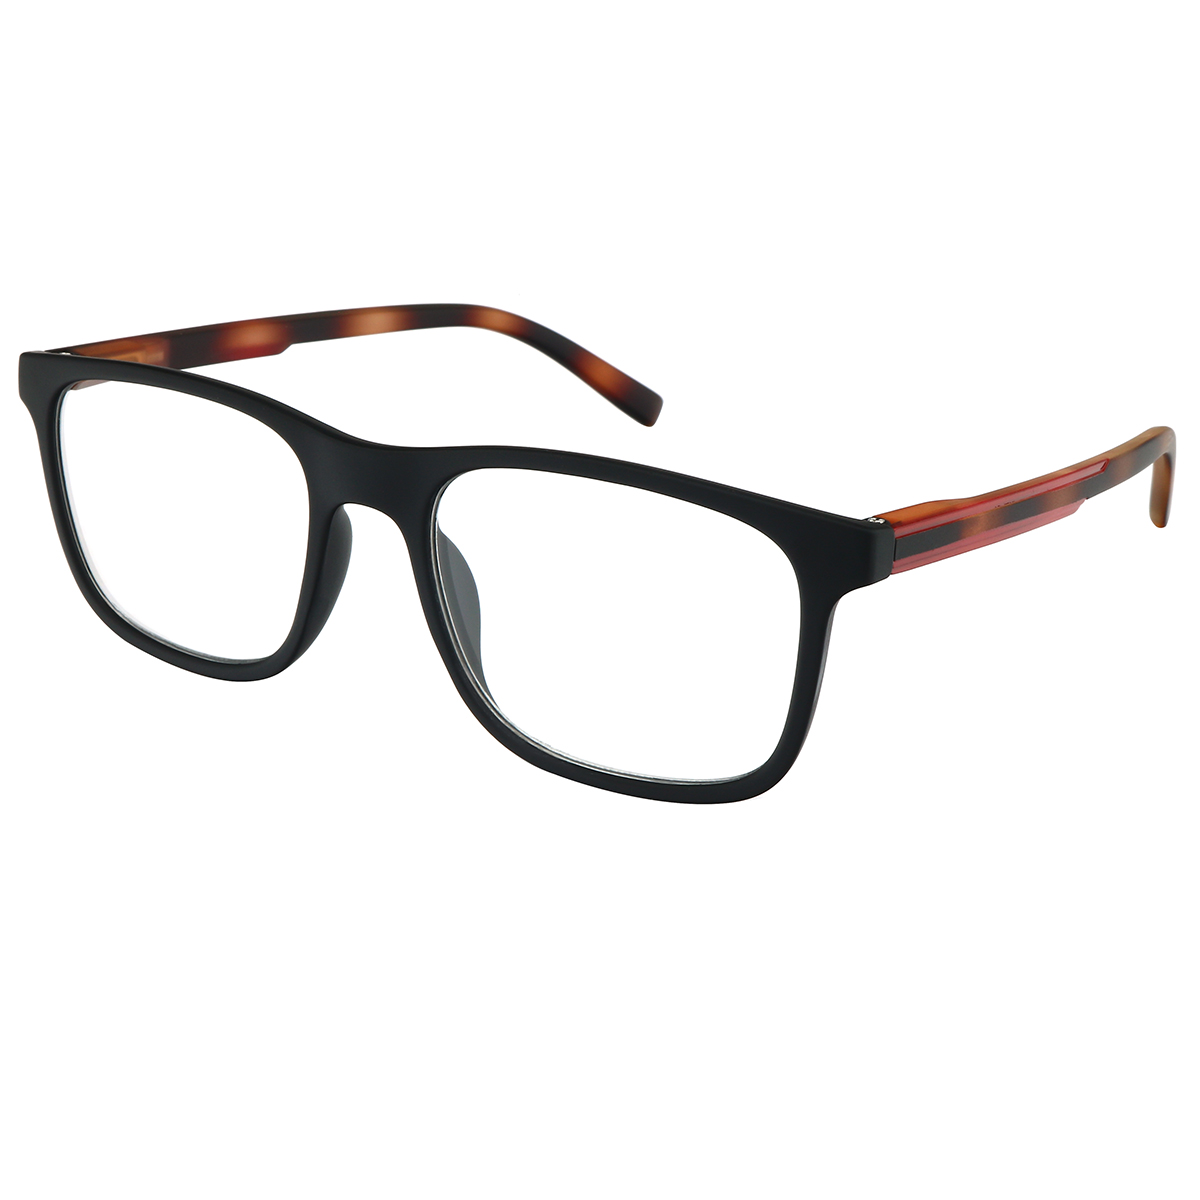 Aetolia - Square Black Reading Glasses for Men